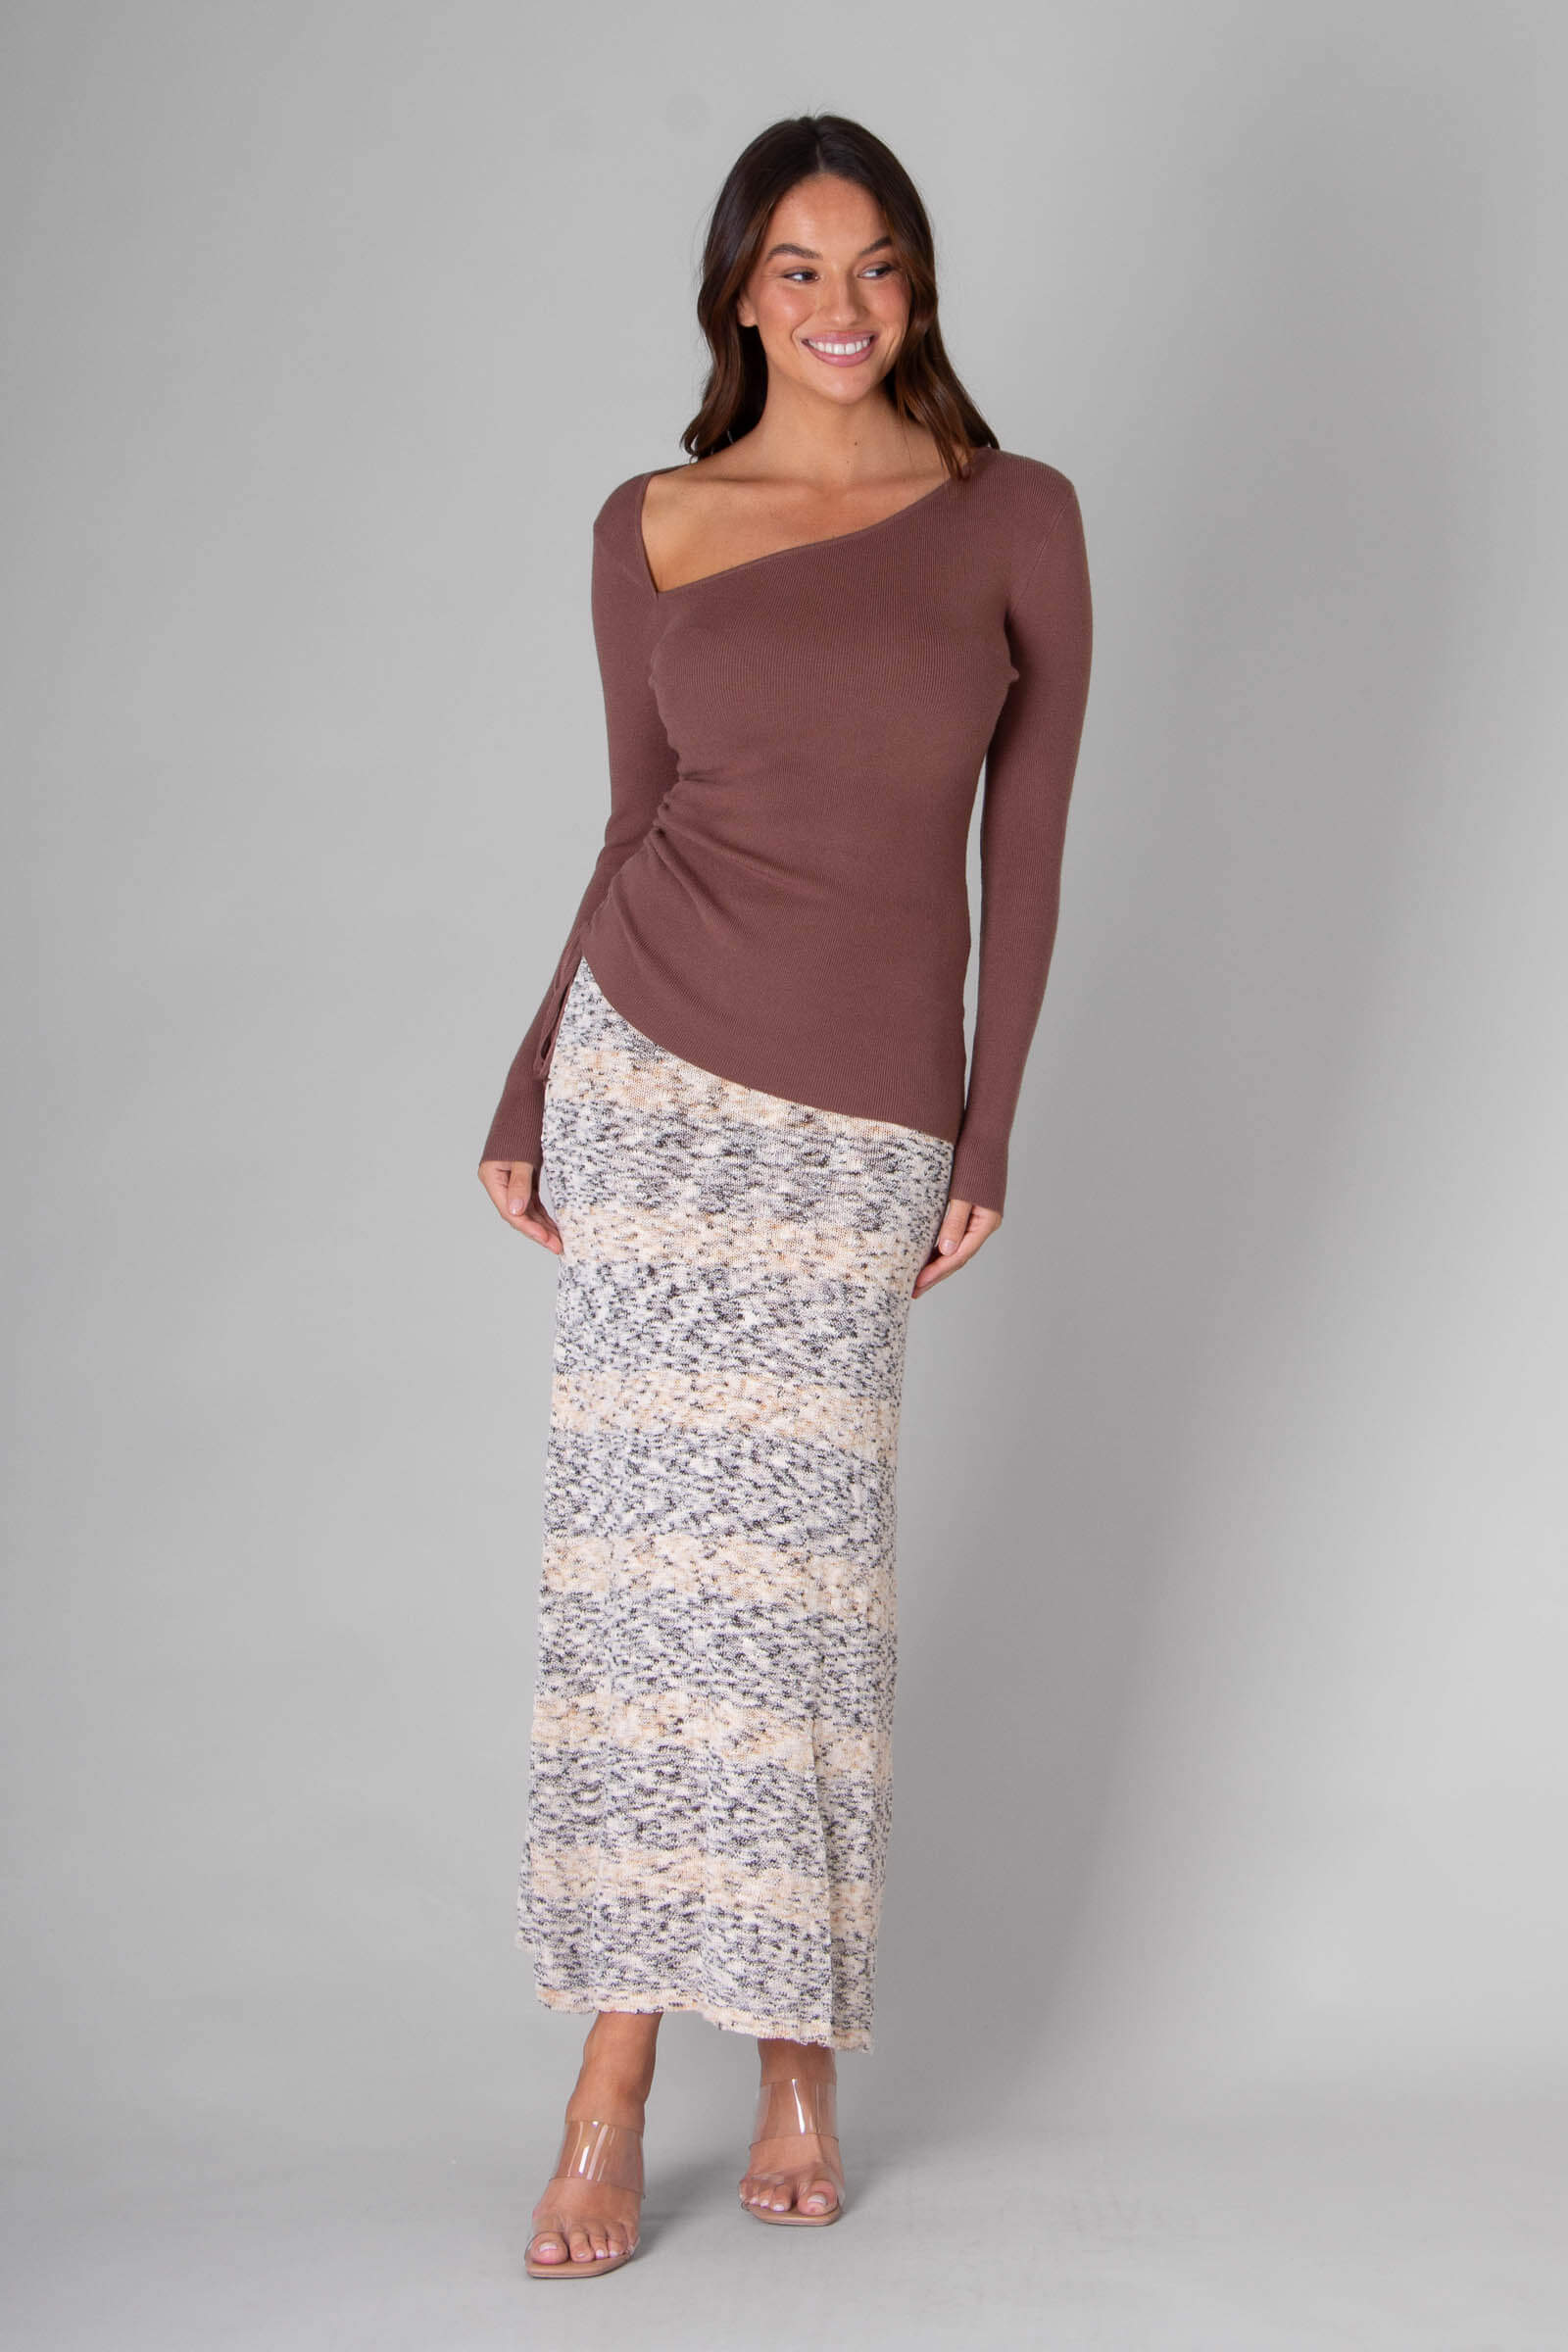 Chosen By Fifi & Annie The Asymmetrical Long Sleeve Knit | Coco BEST SELLER NEW COLOUR